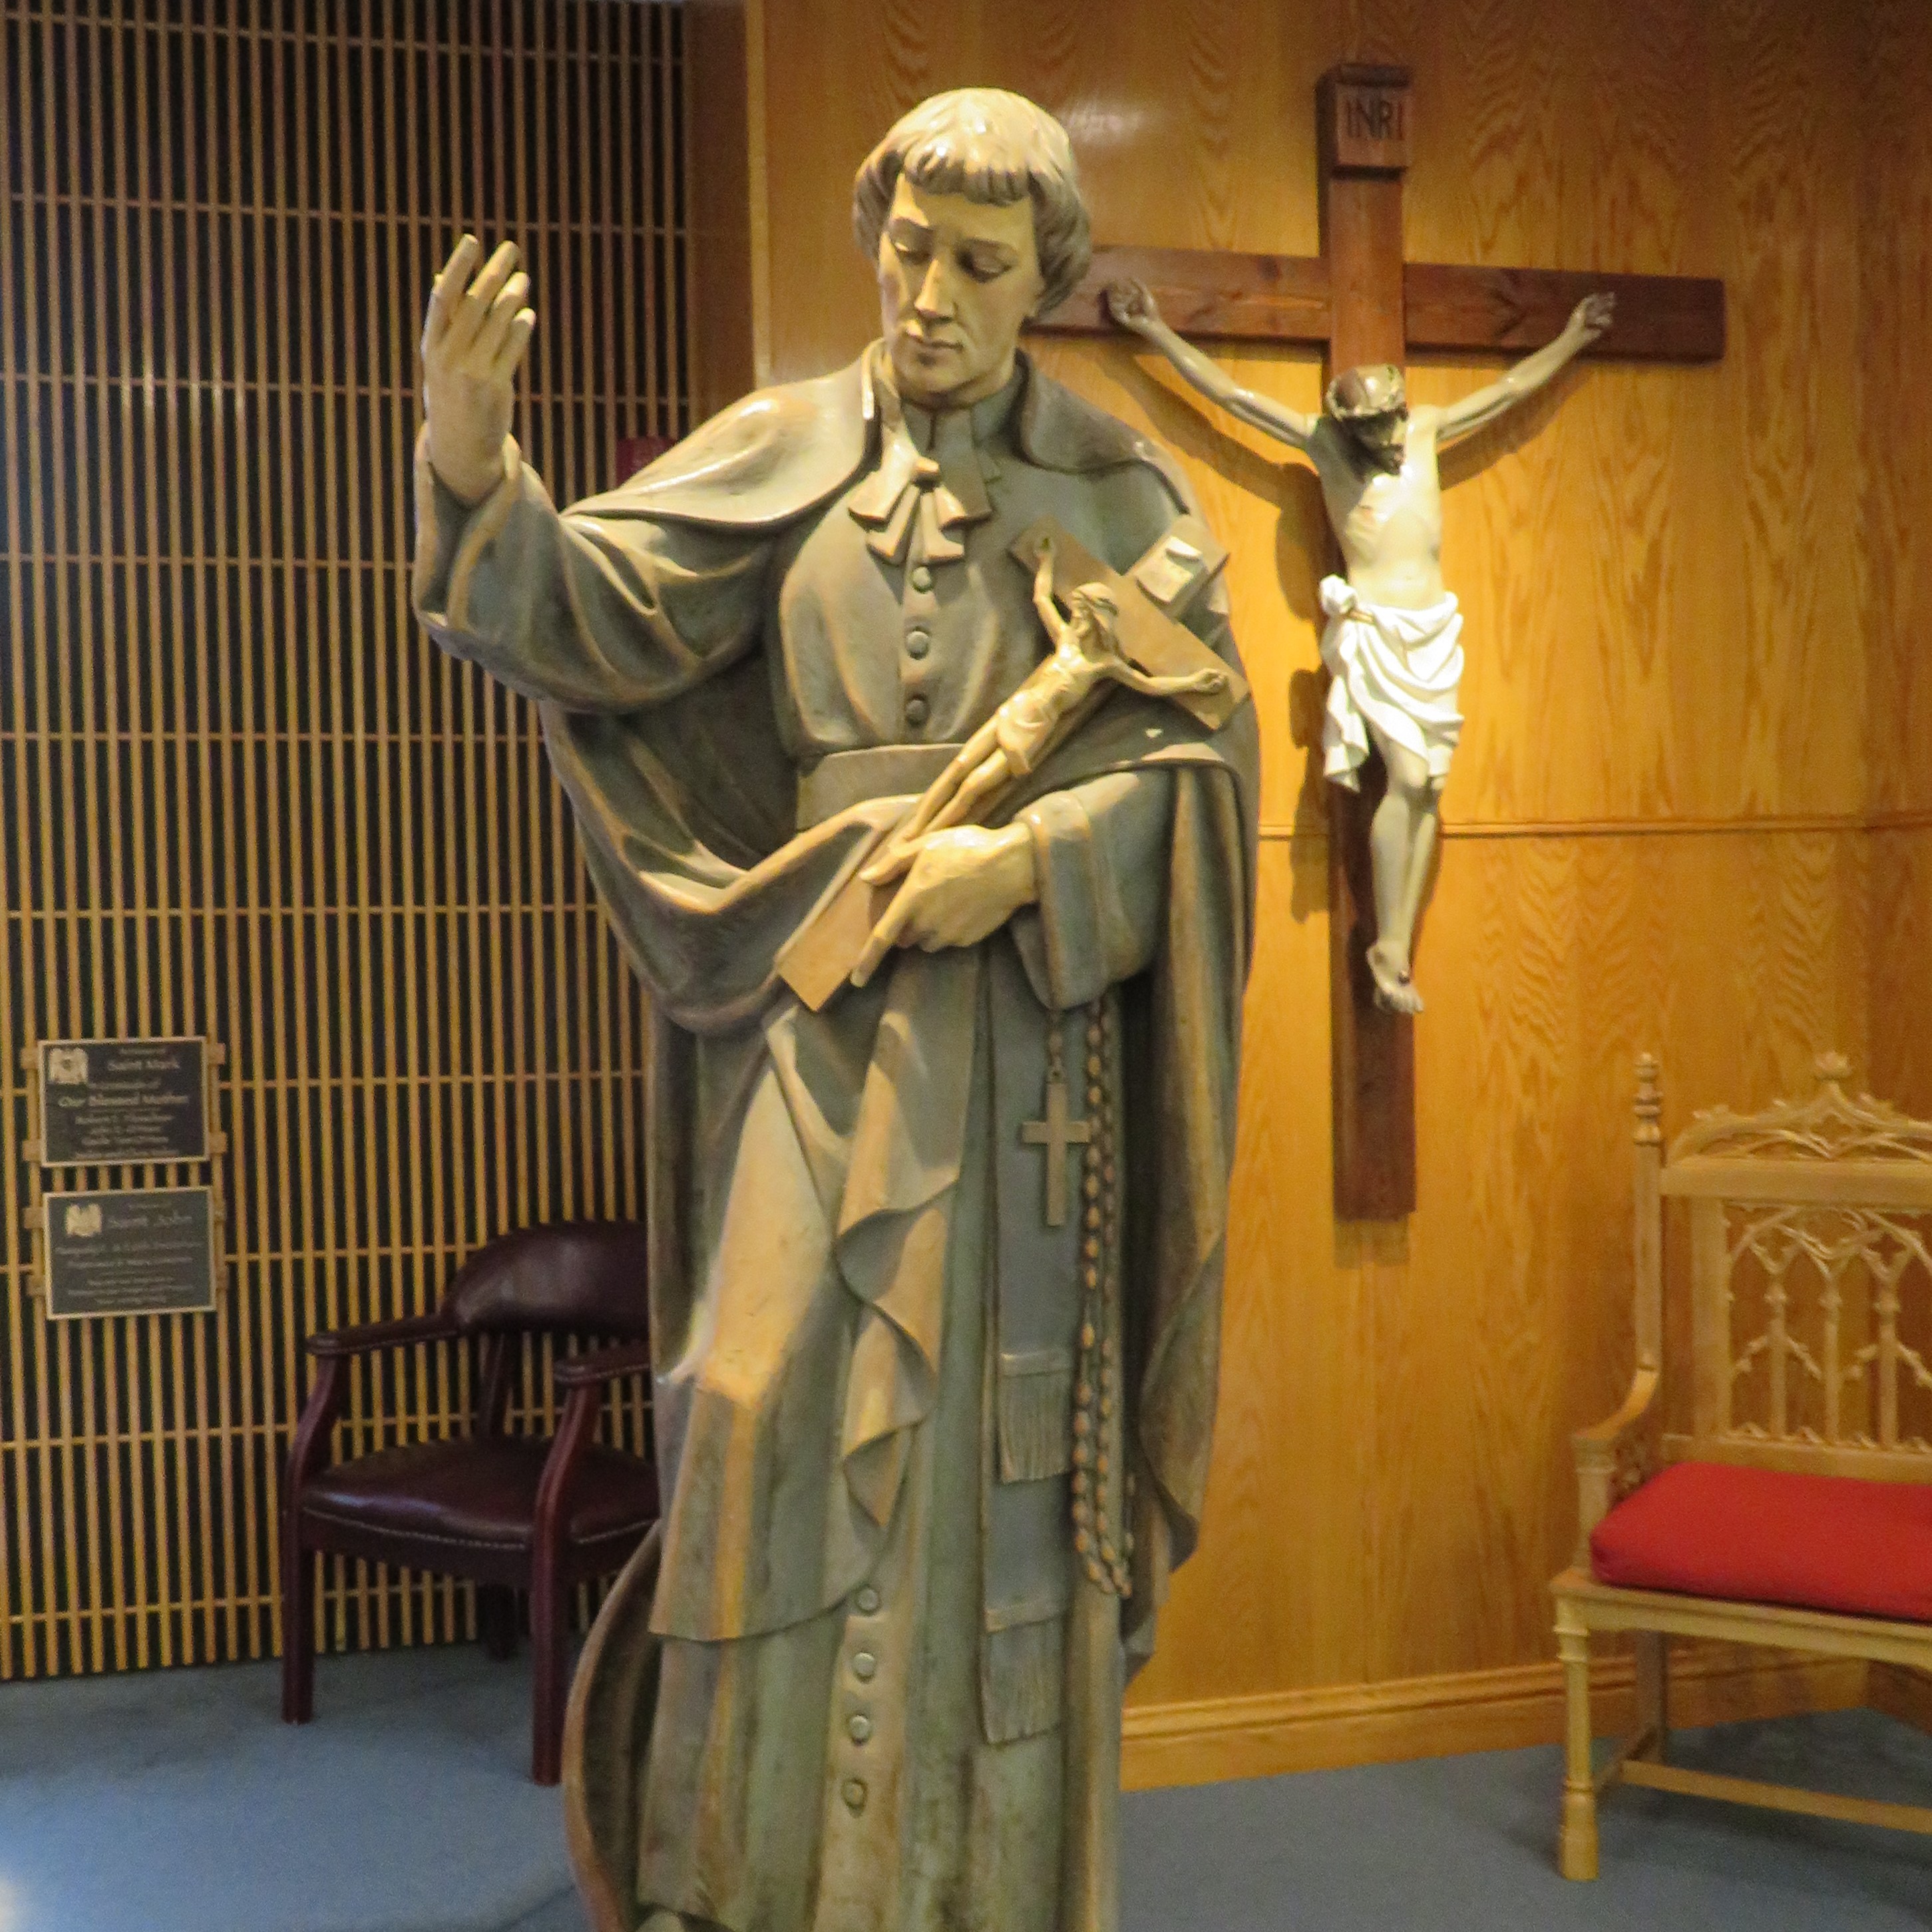 St. Louis de Montfort: Apostle of the Cross